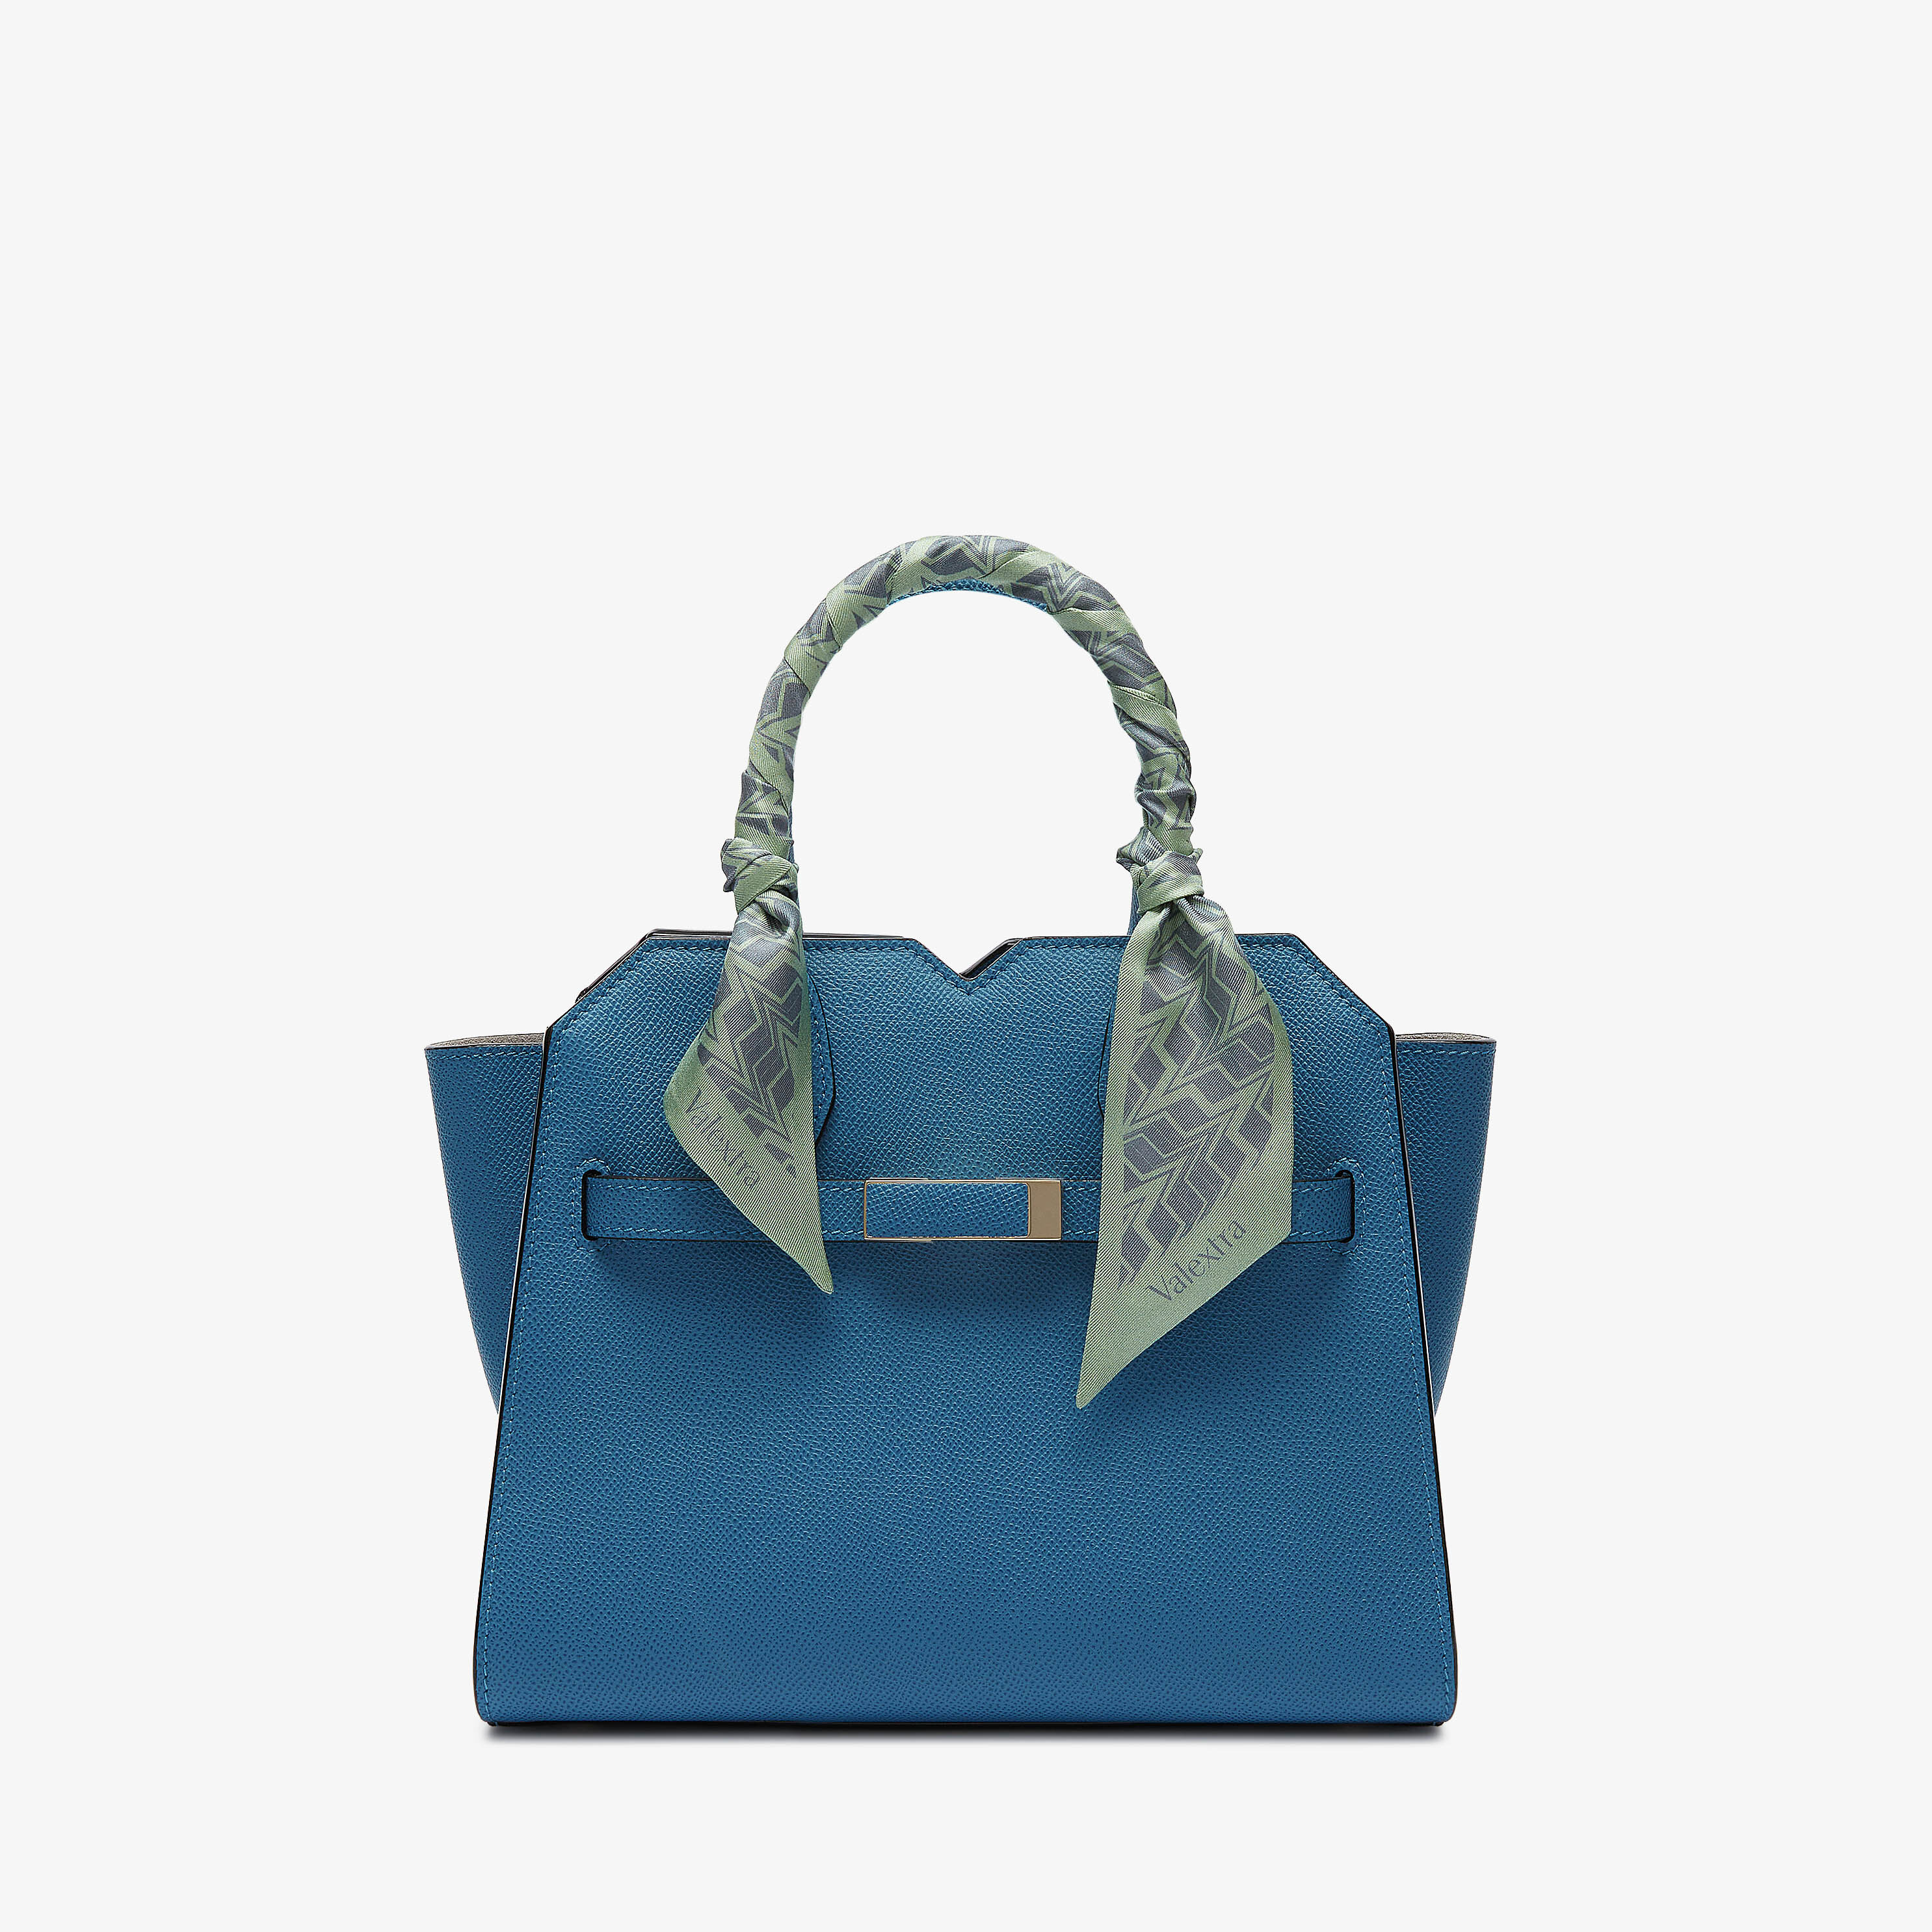 Bags accessories: Handles, shoulder straps, bag charms | Valextra